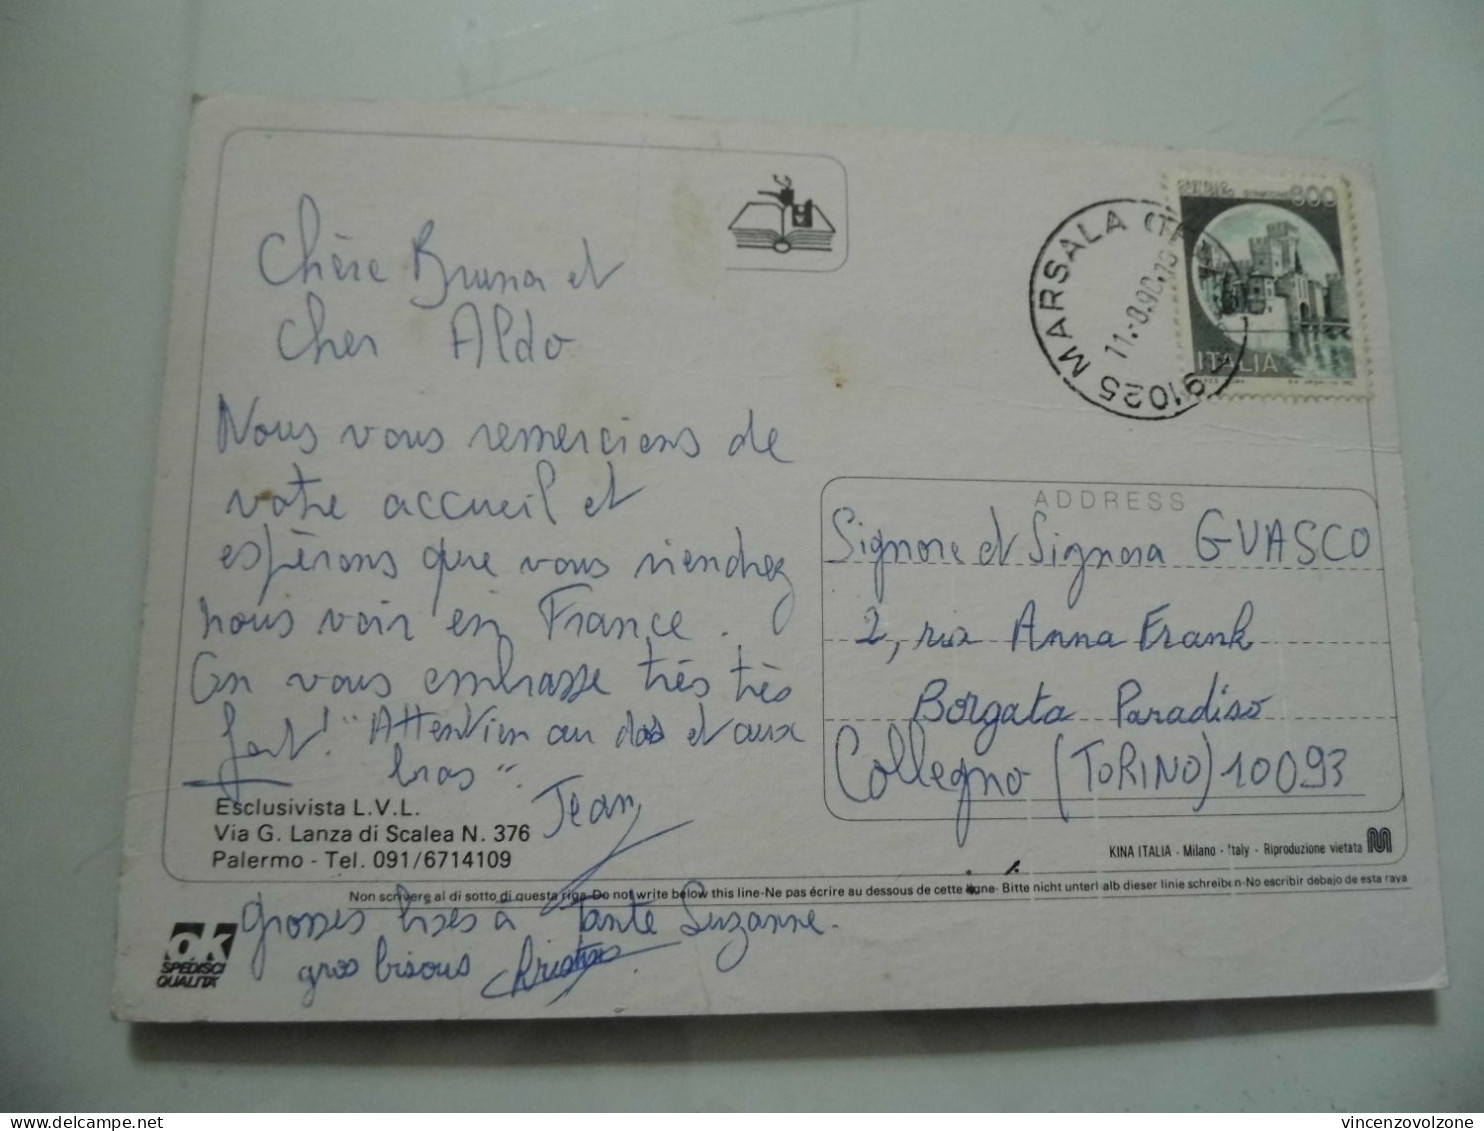 Cartolina Viaggiata "SALUTI DA MARSALA" Vedutine 1990 - Trapani